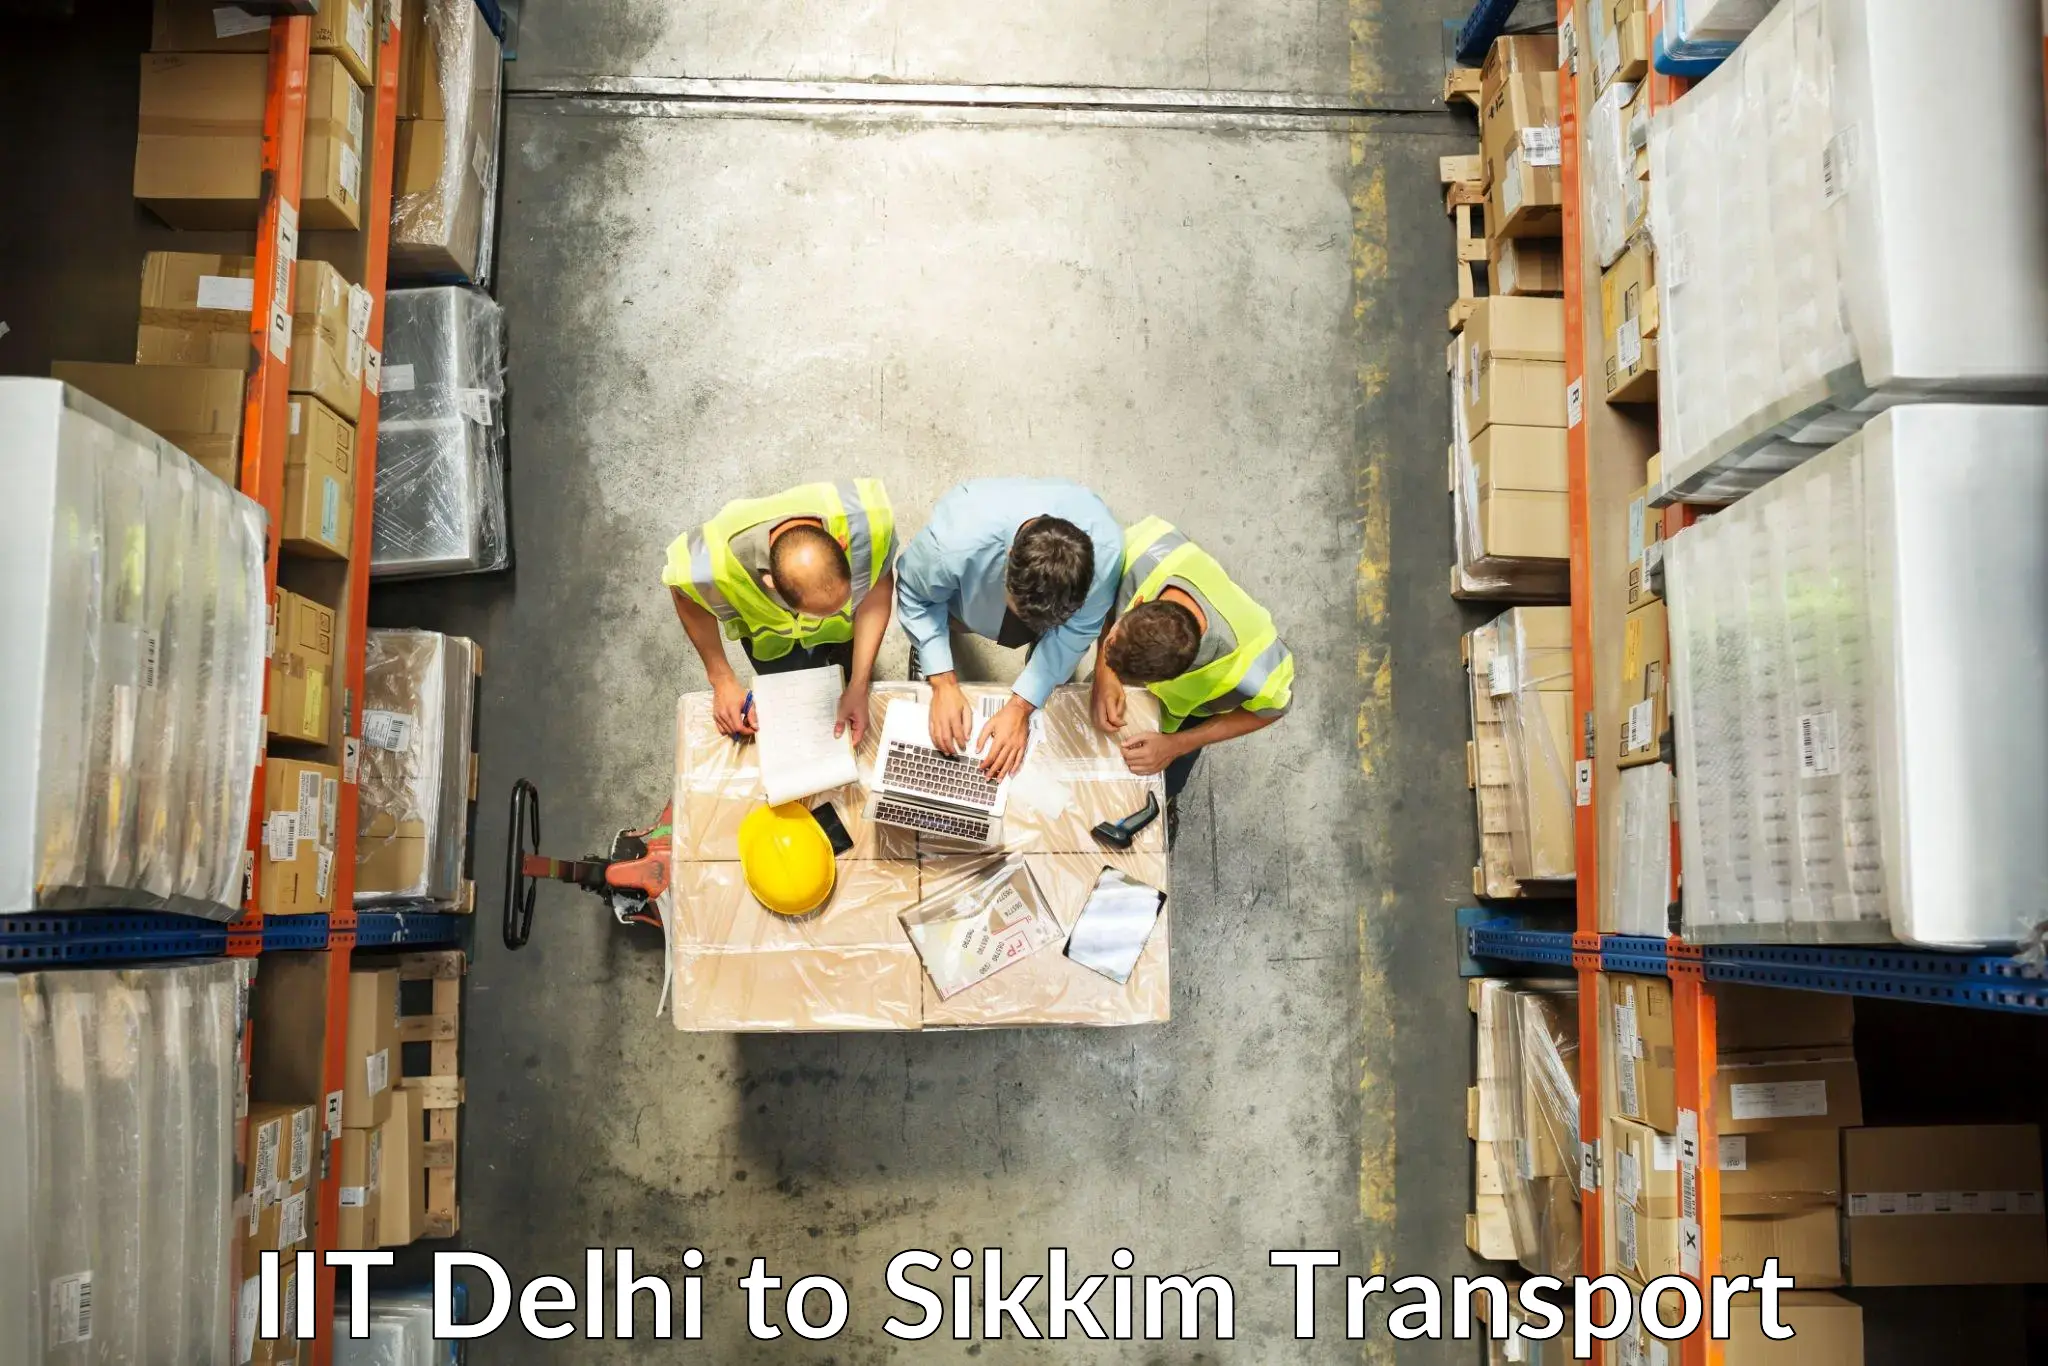 Bike shipping service IIT Delhi to Sikkim